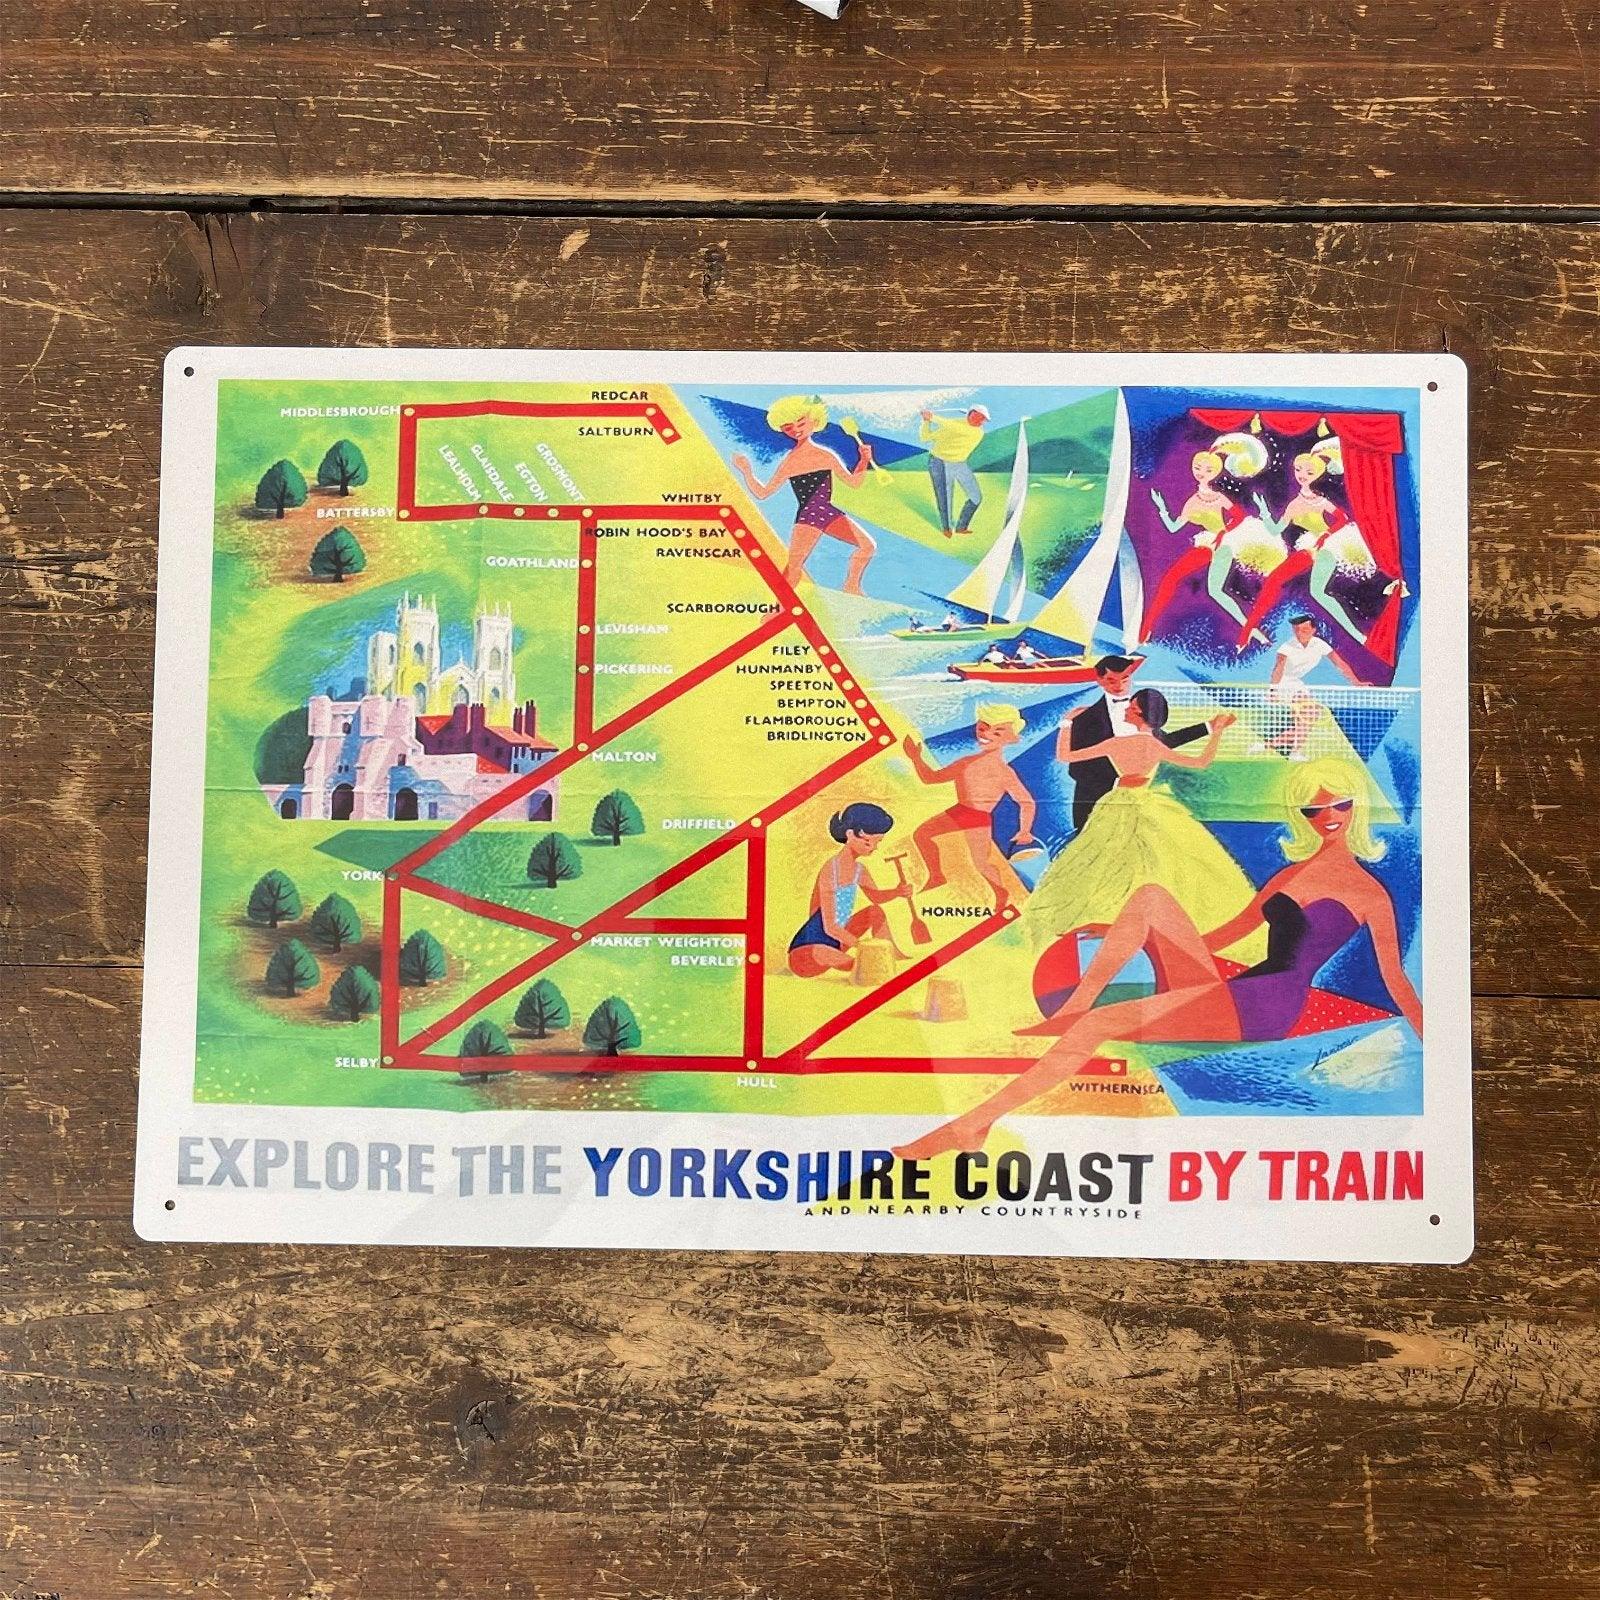 Vintage Metal Sign - British Railways Retro Advertising, Explore The Yorkshire Coast - £27.99 - Retro Advertising 